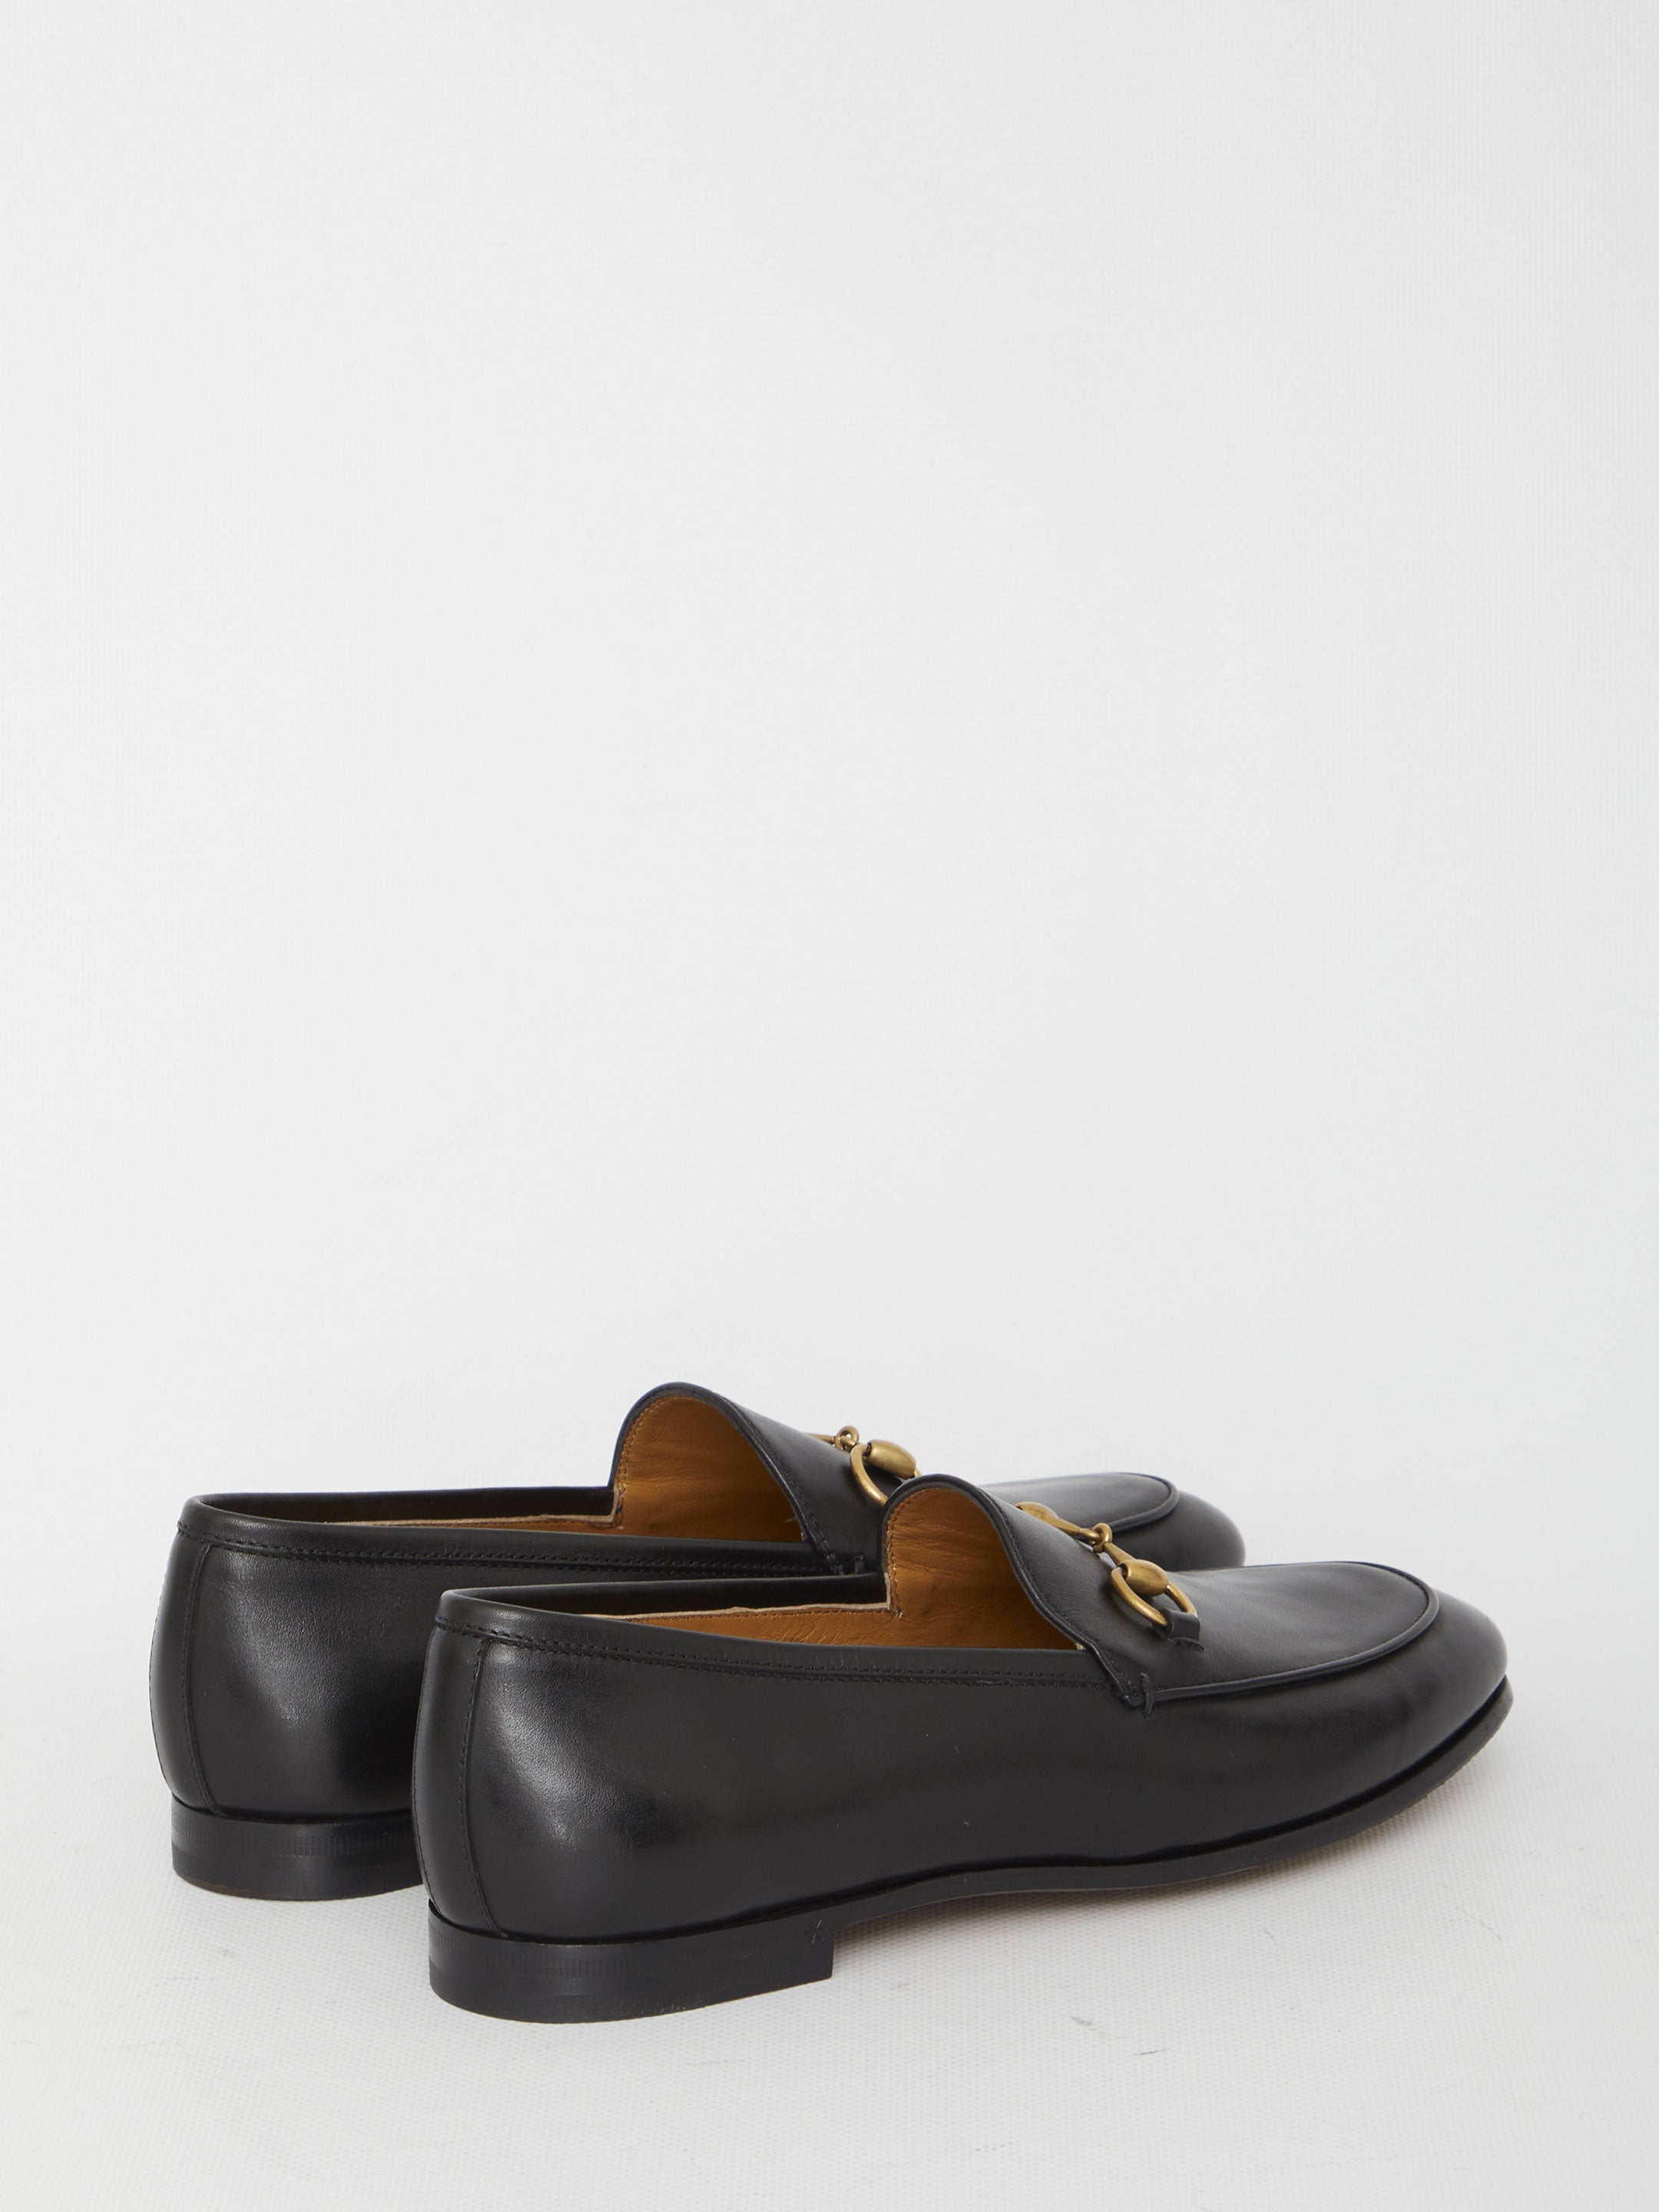 GUCCI-OUTLET-SALE-Jordan-loafers-Flache-Schuhe-38-BLACK-ARCHIVE-COLLECTION-3.jpg